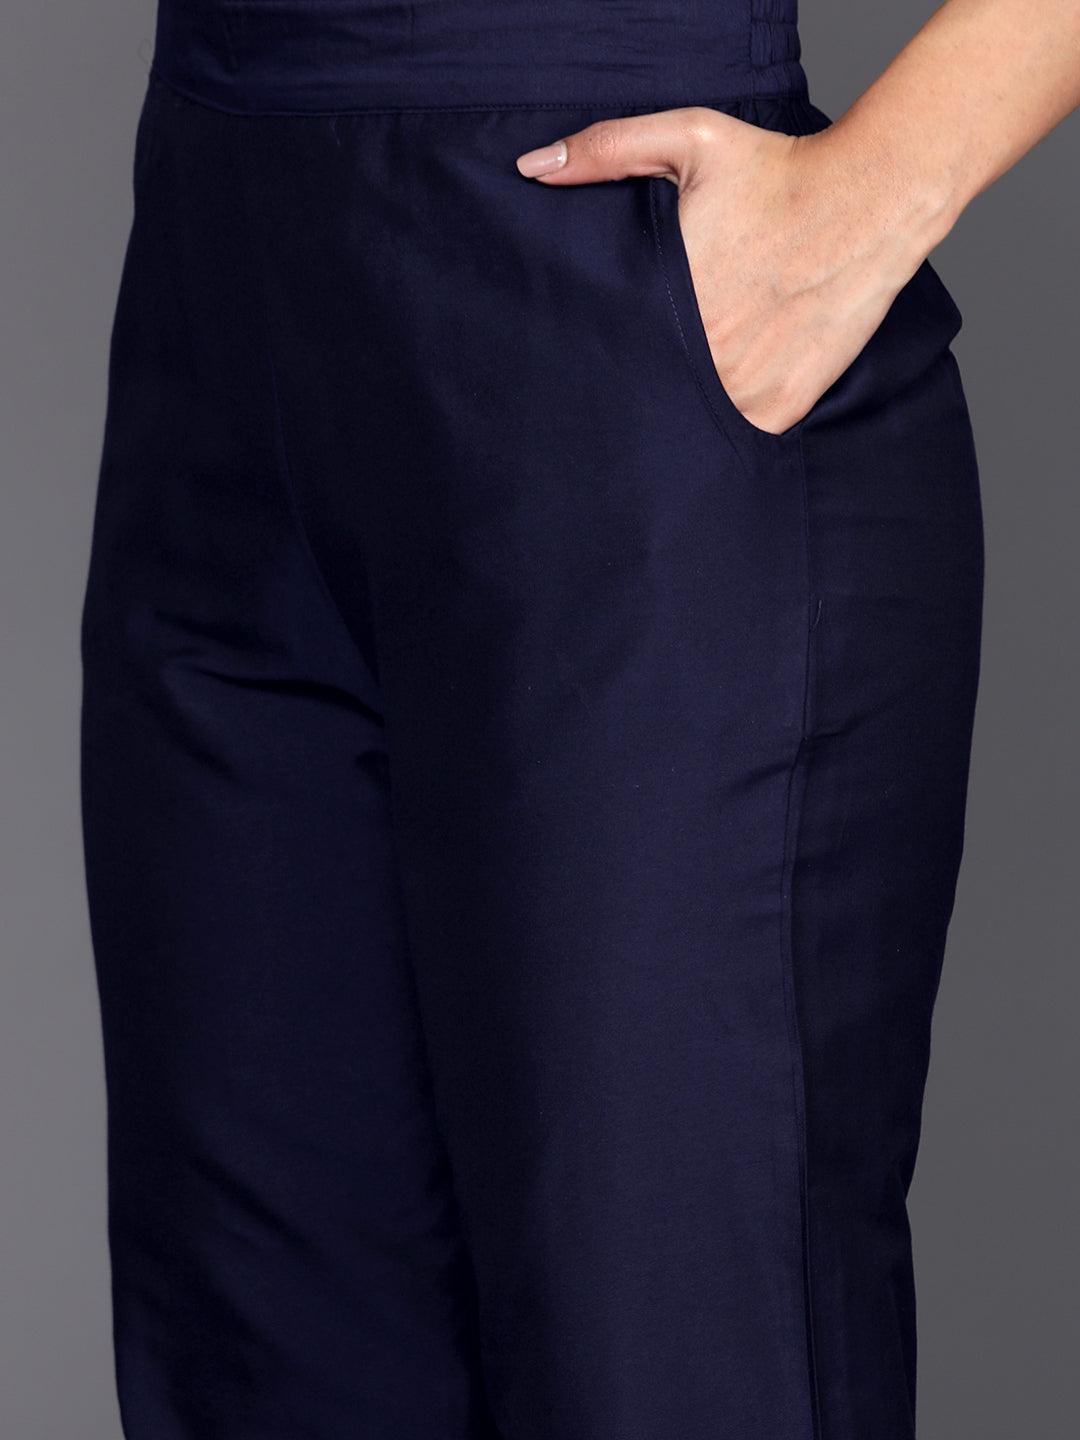 Blue Yoke Design Silk Blend Straight Kurta With Trousers & Dupatta - Libas